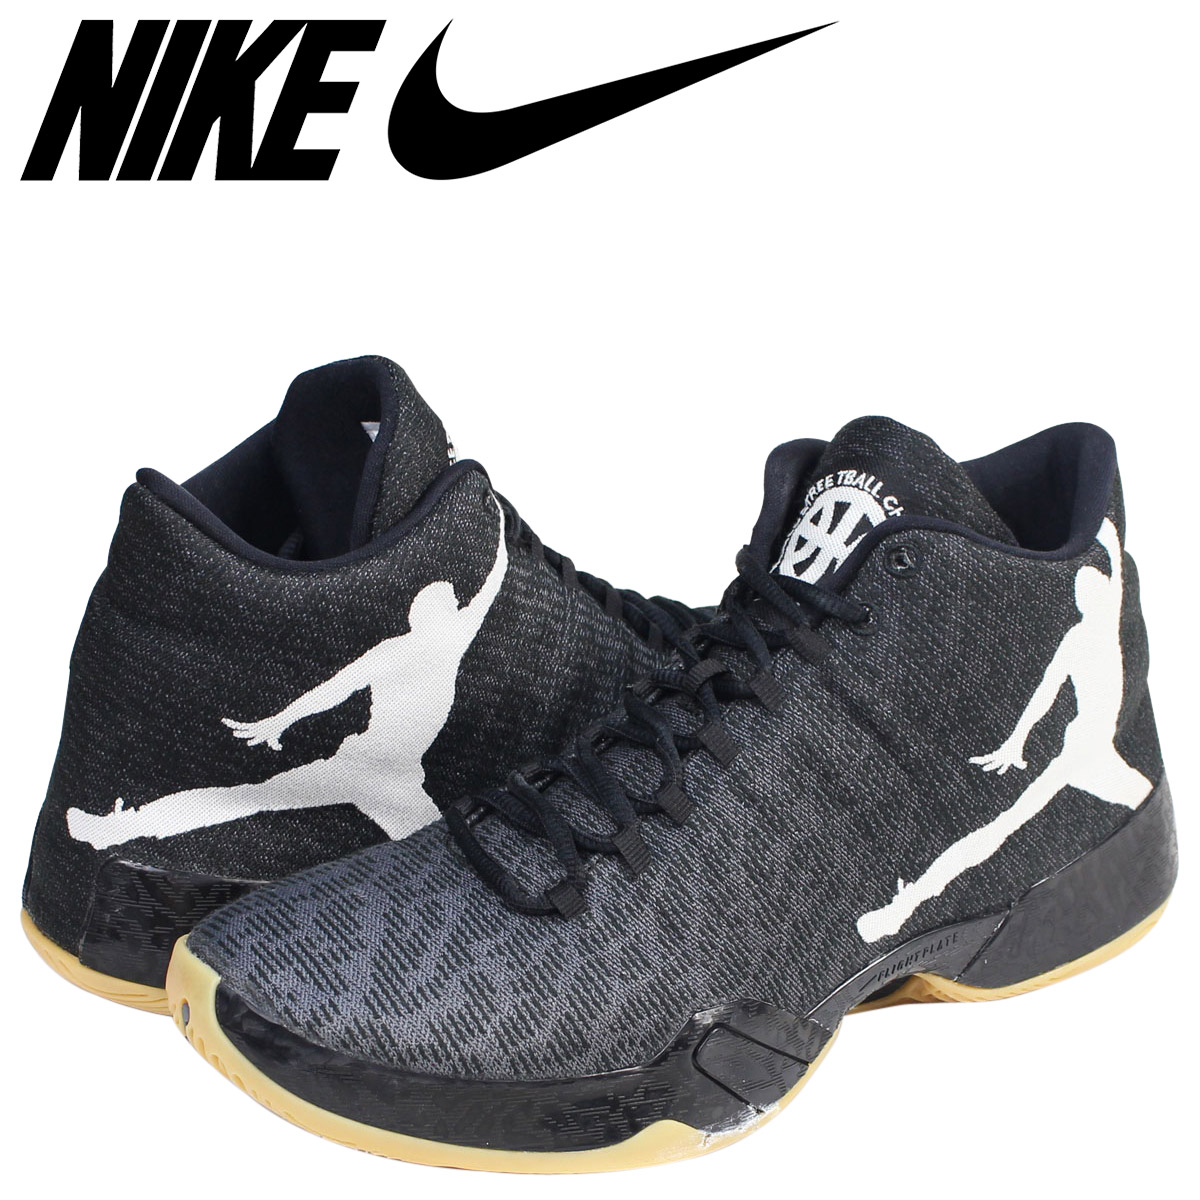 Nike NIKE Air Jordan 29 sneakers AIR JORDAN XX9 QUAI 54 805，254-004 men's shoes black